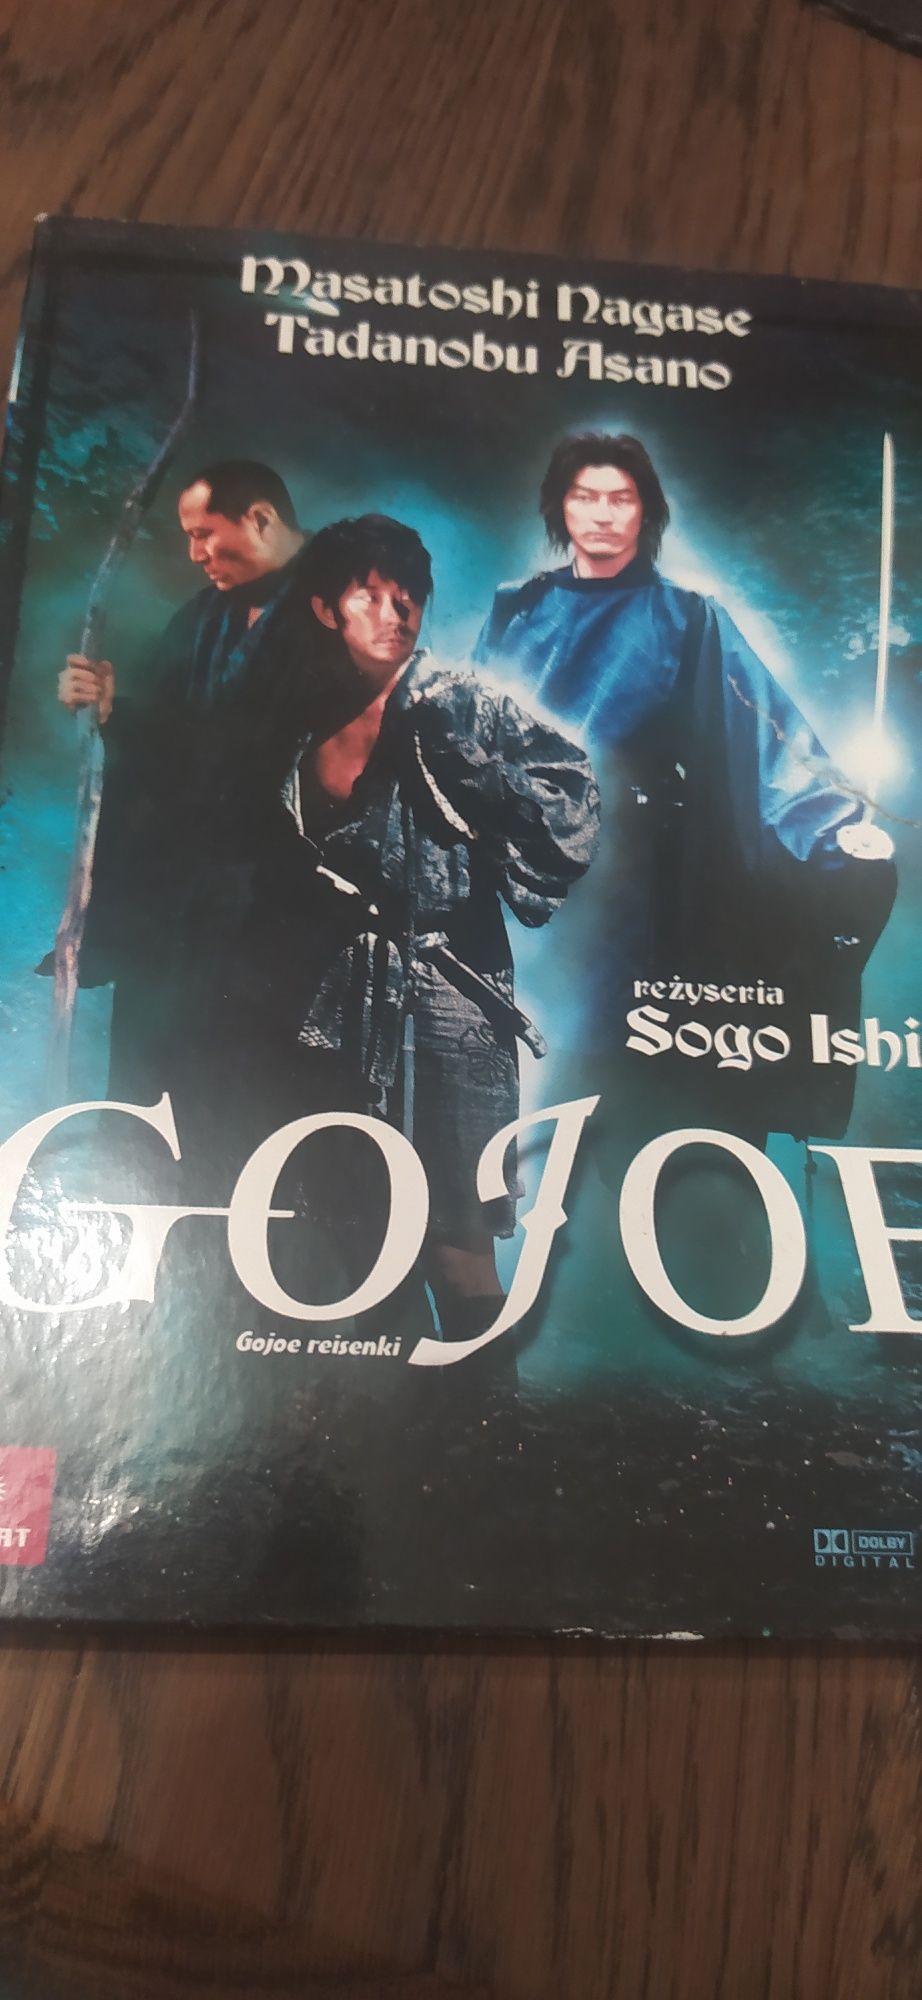 Gojoe -Tadanobu Asano dvd